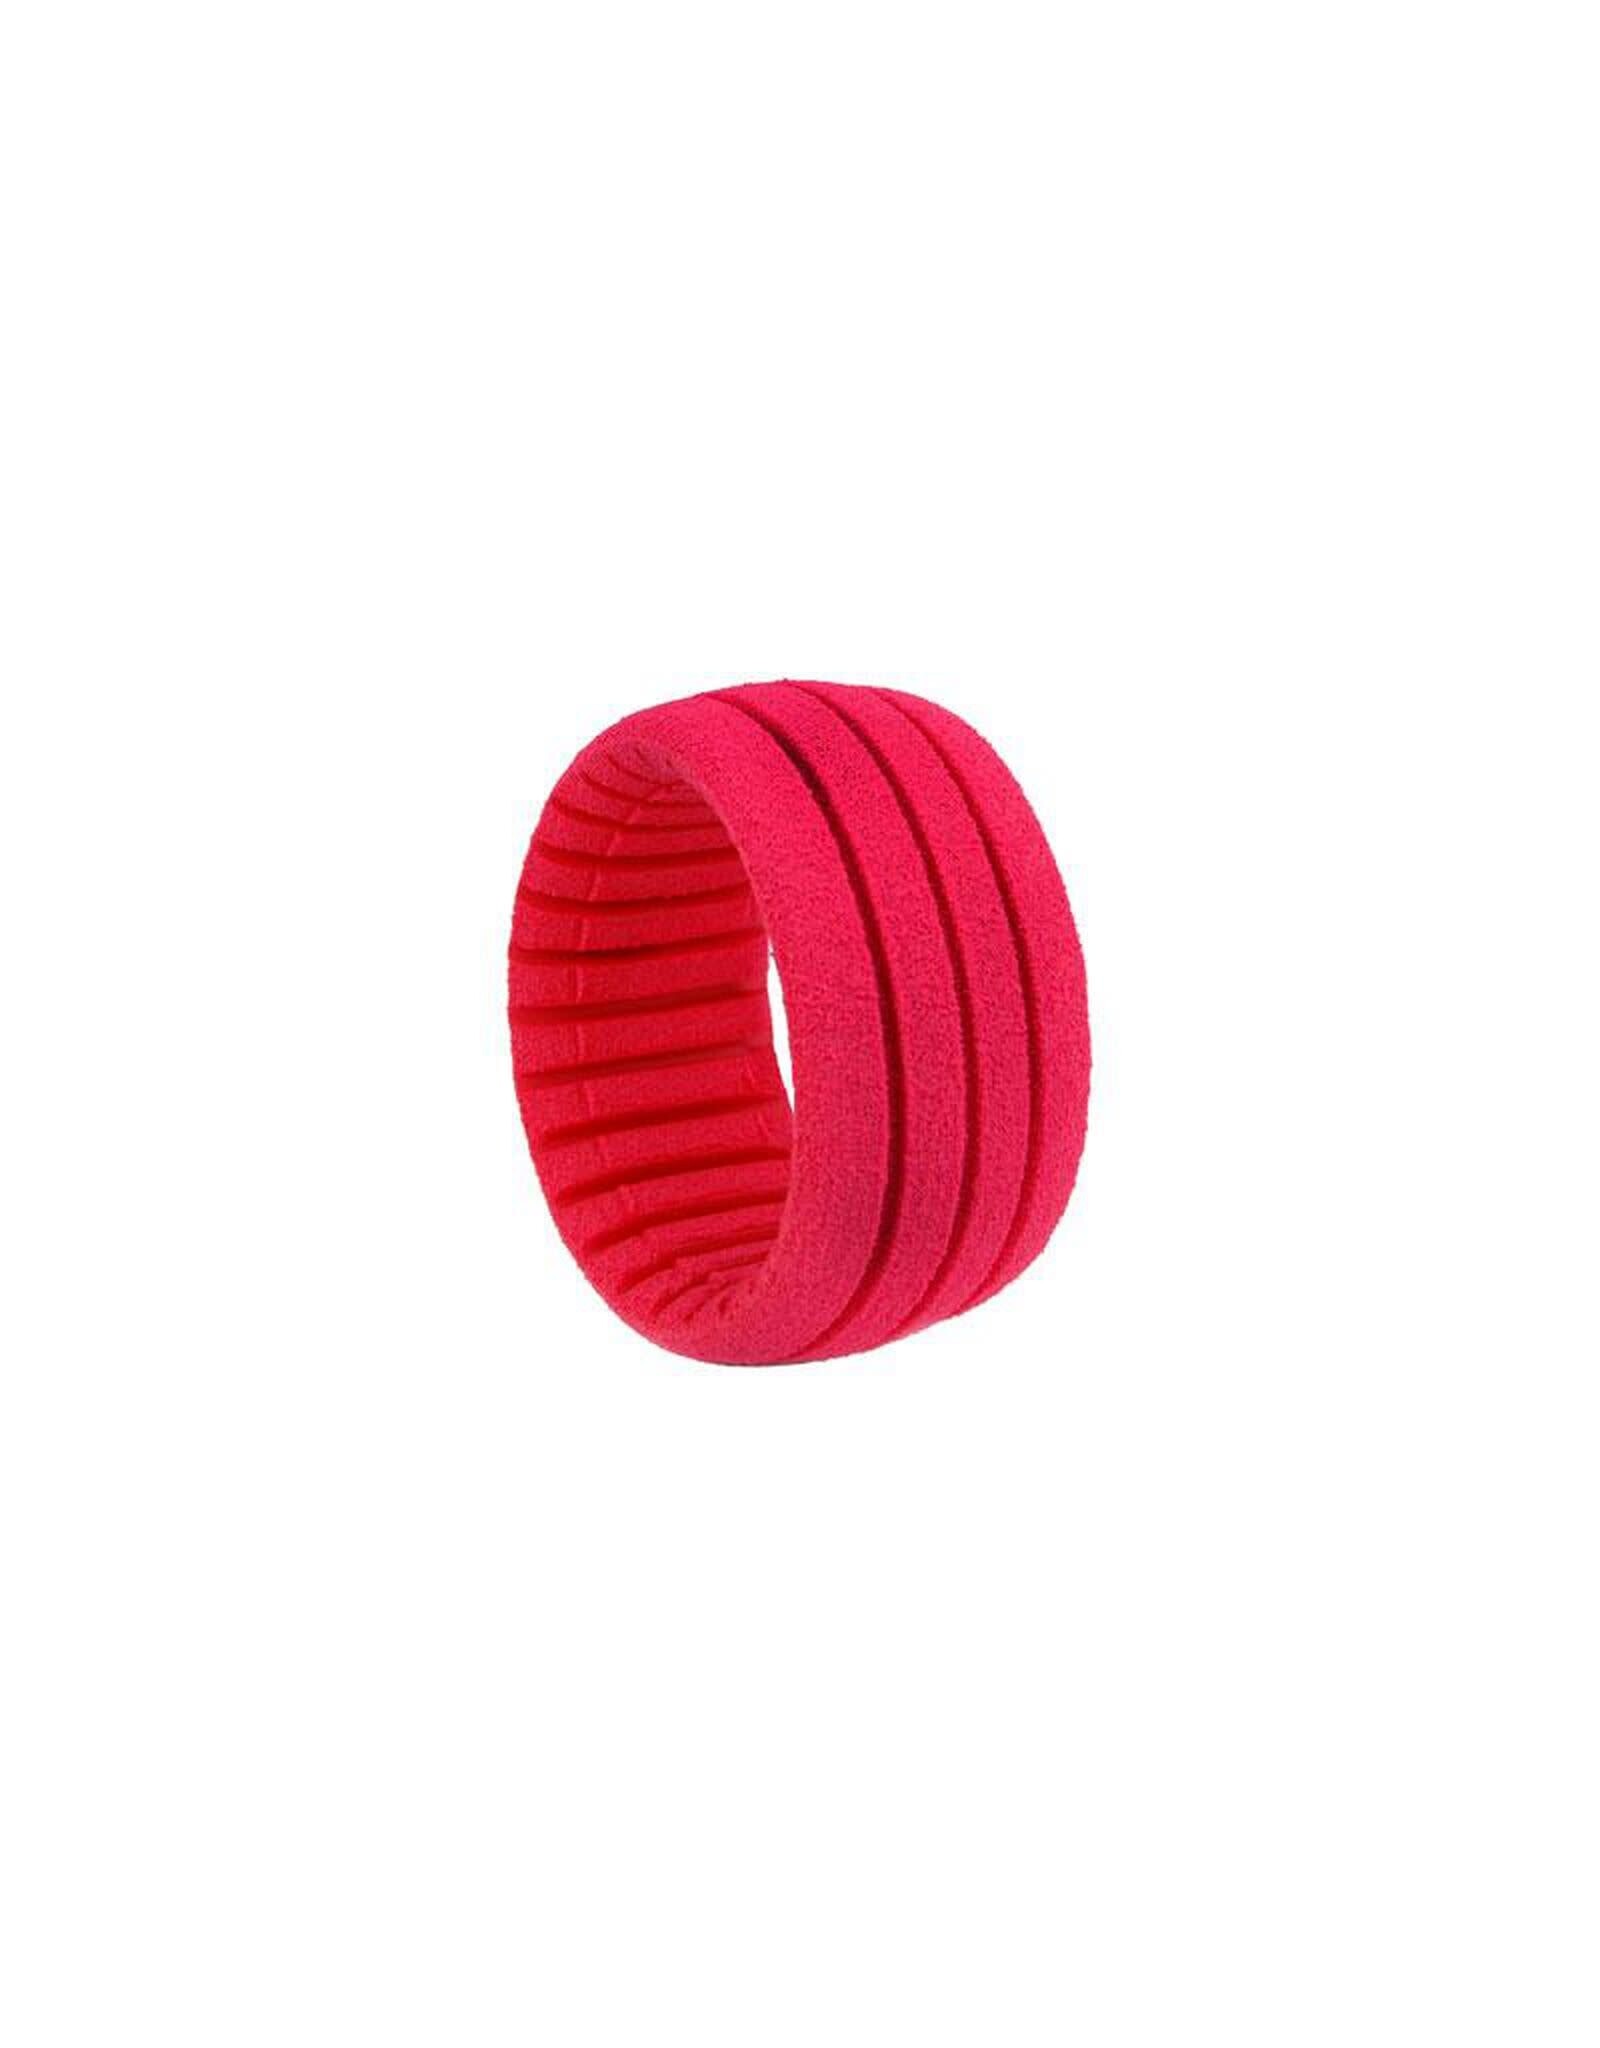 Aka 1/8 Truggy Evo Impact Soft Tire w/ Red Insert (2)